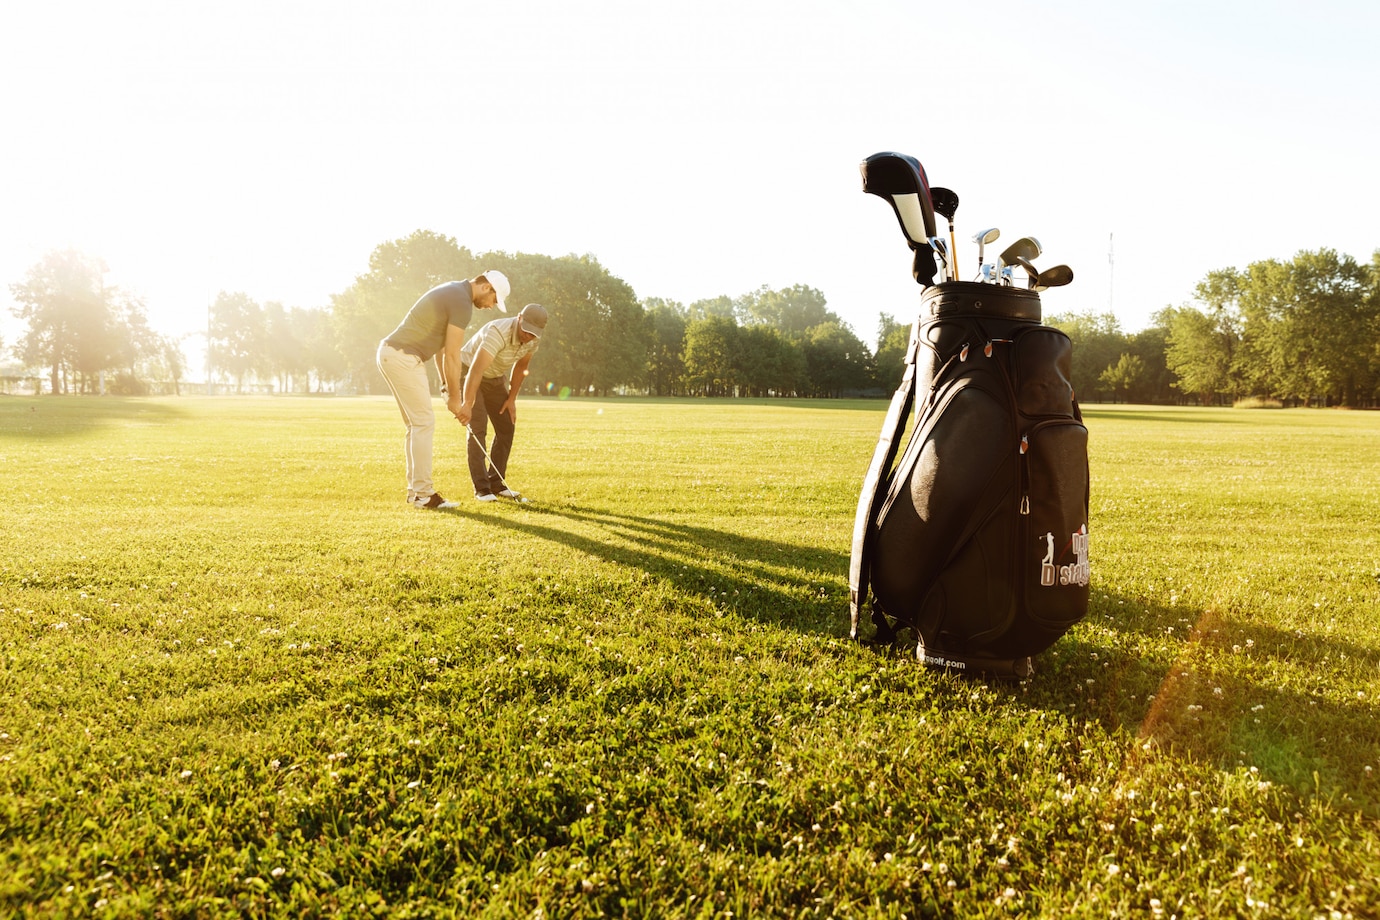 The Six Factors Golfers Consider When Choosing a Golf Course